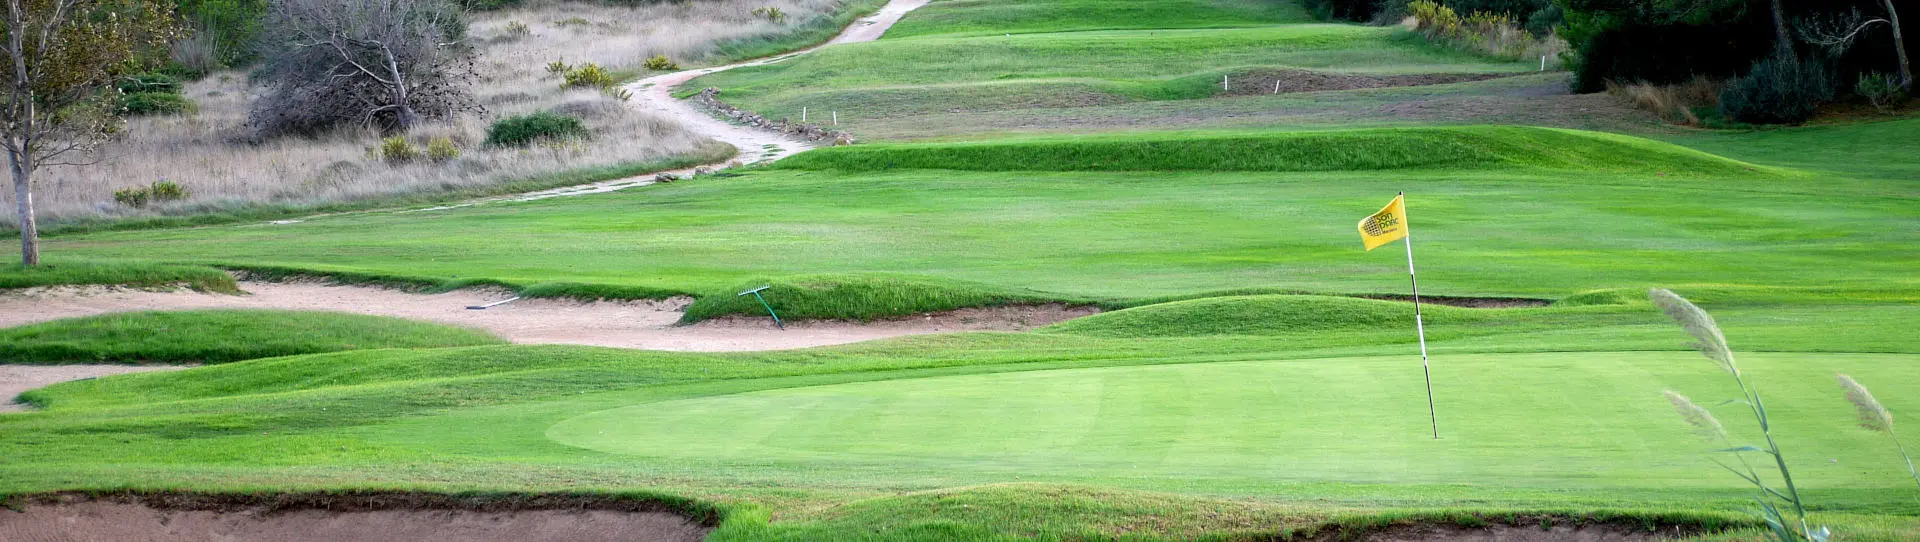 Spain golf courses - Son Parc Menorca Golf Course - Photo 1